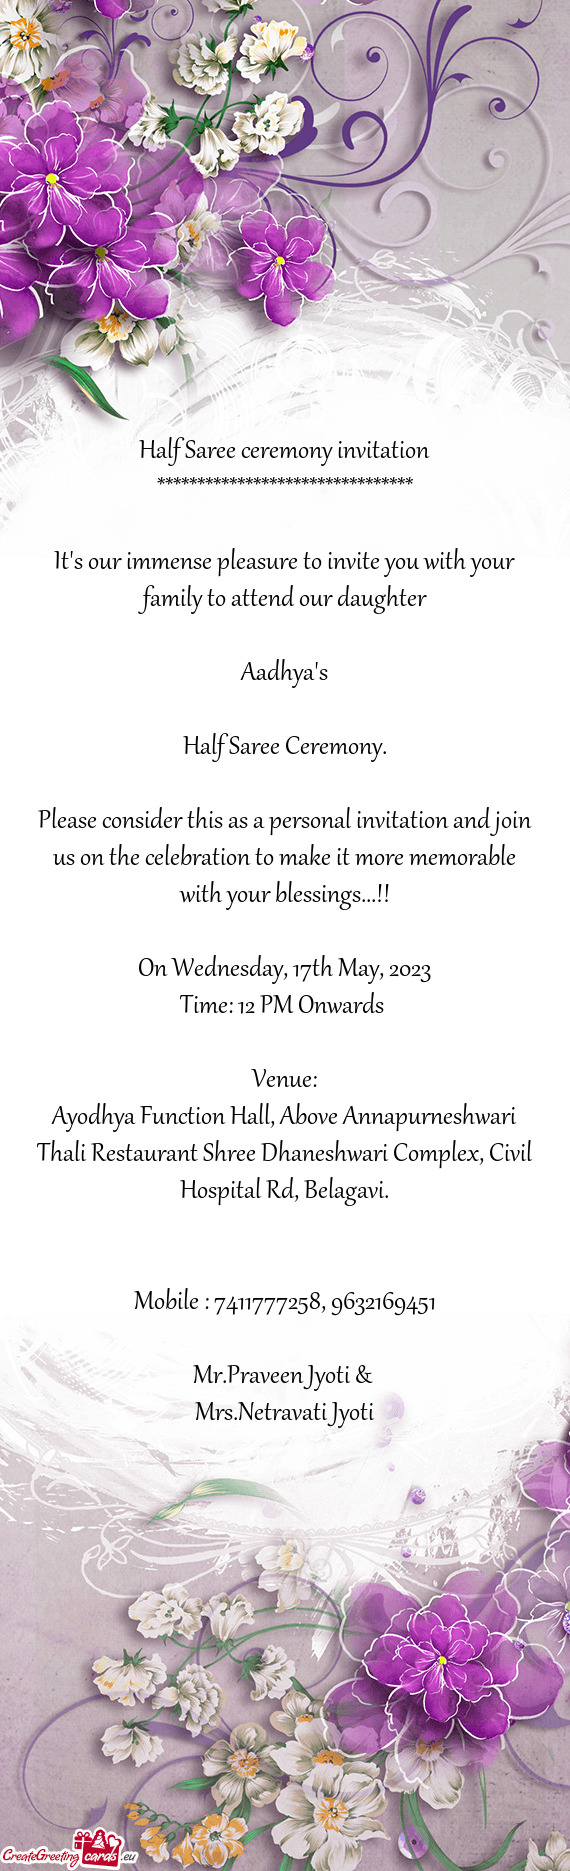 Ayodhya Function Hall, Above Annapurneshwari Thali Restaurant Shree Dhaneshwari Complex, Civil Hospi